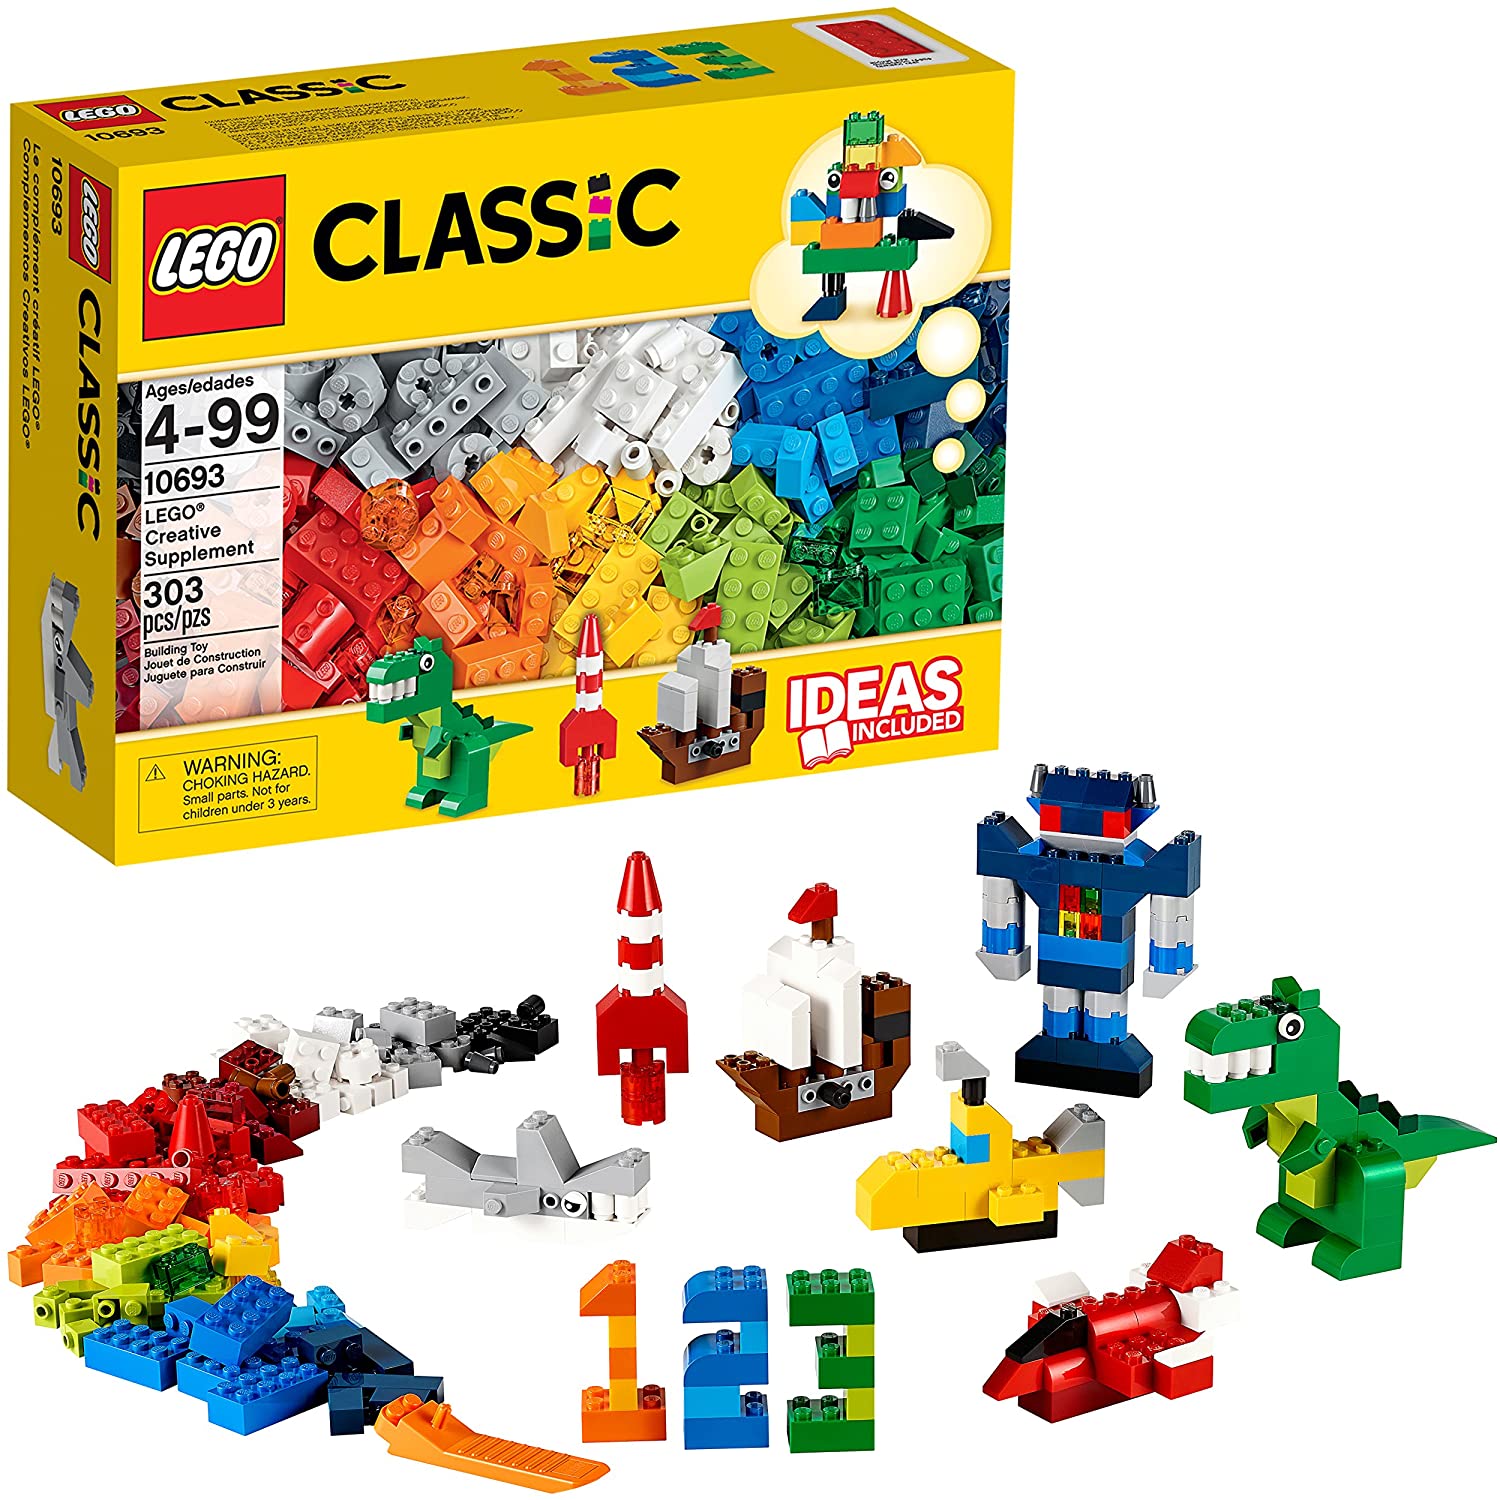 5 Unique Gift Ideas Every LEGO Loving Kid Needs - www.craftaboo.com